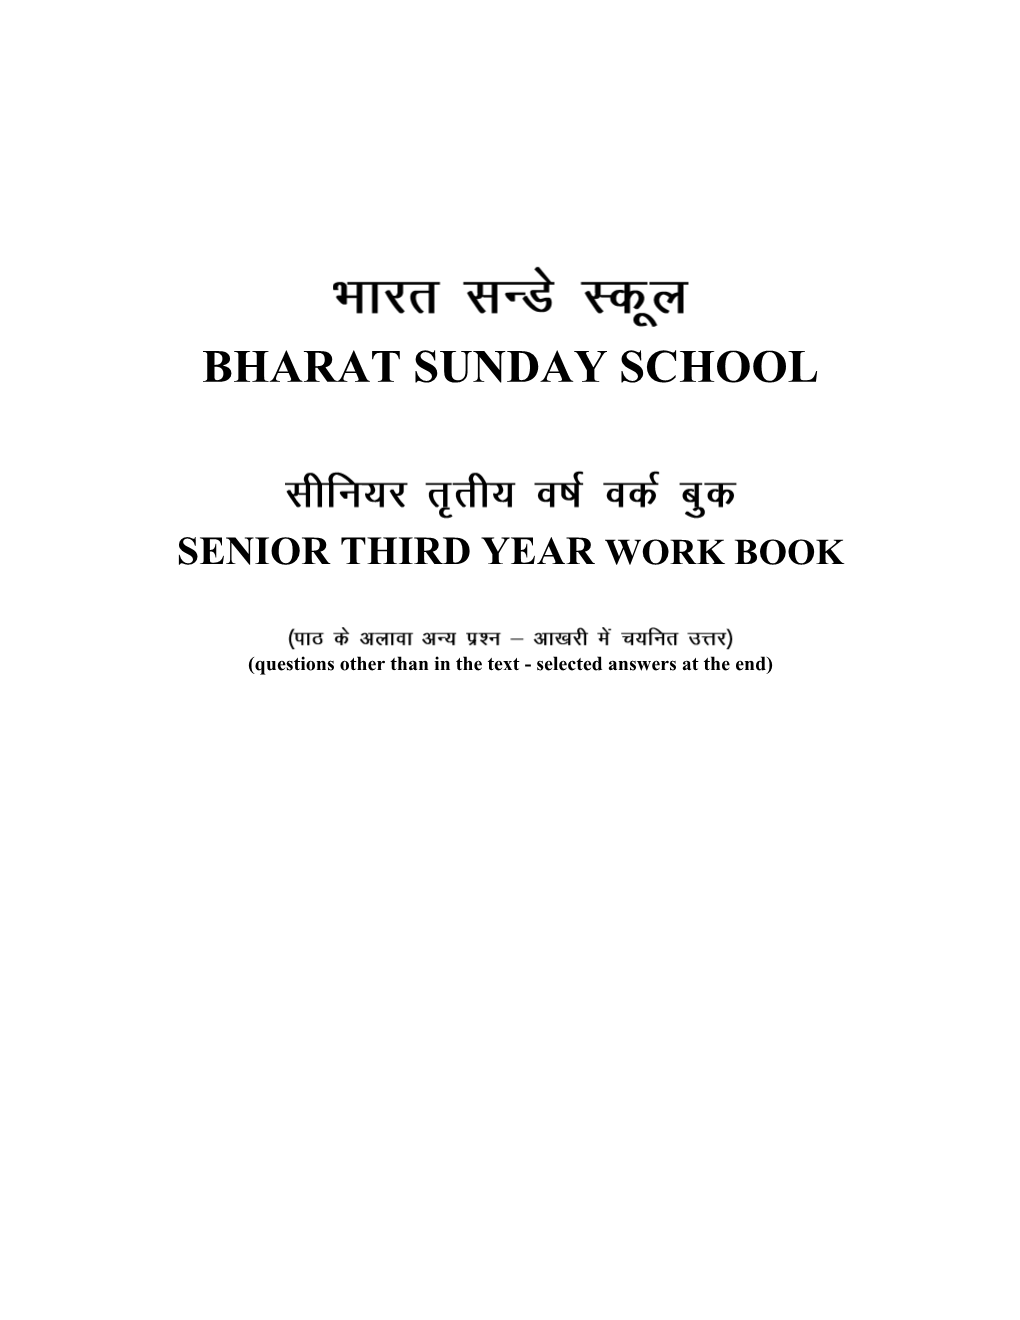 Bharat Sunday School Senior Third Year Work Book